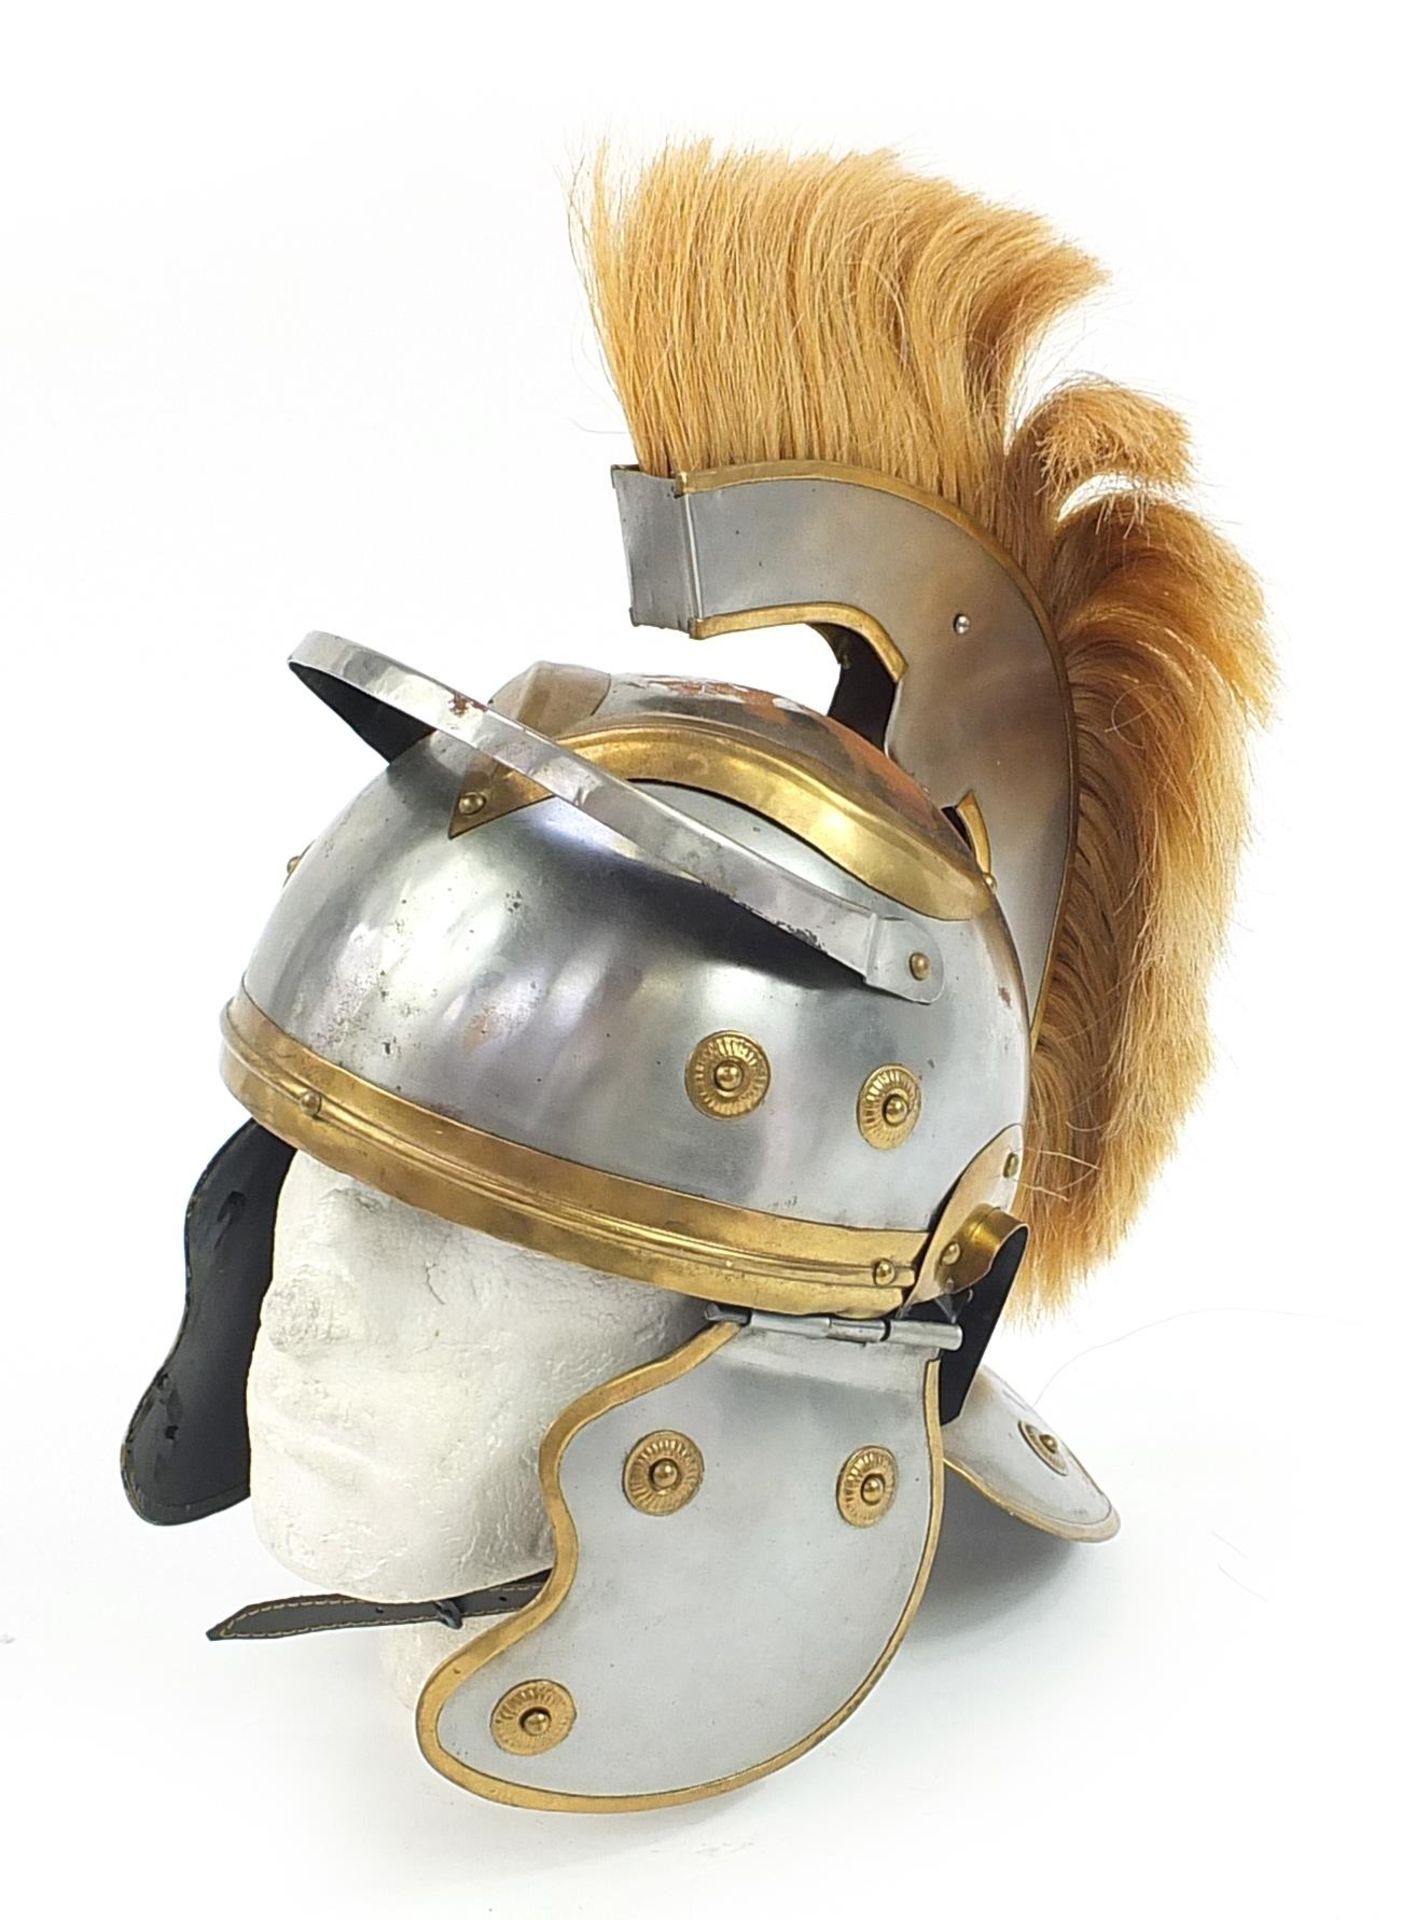 Roman gladiator style helmet